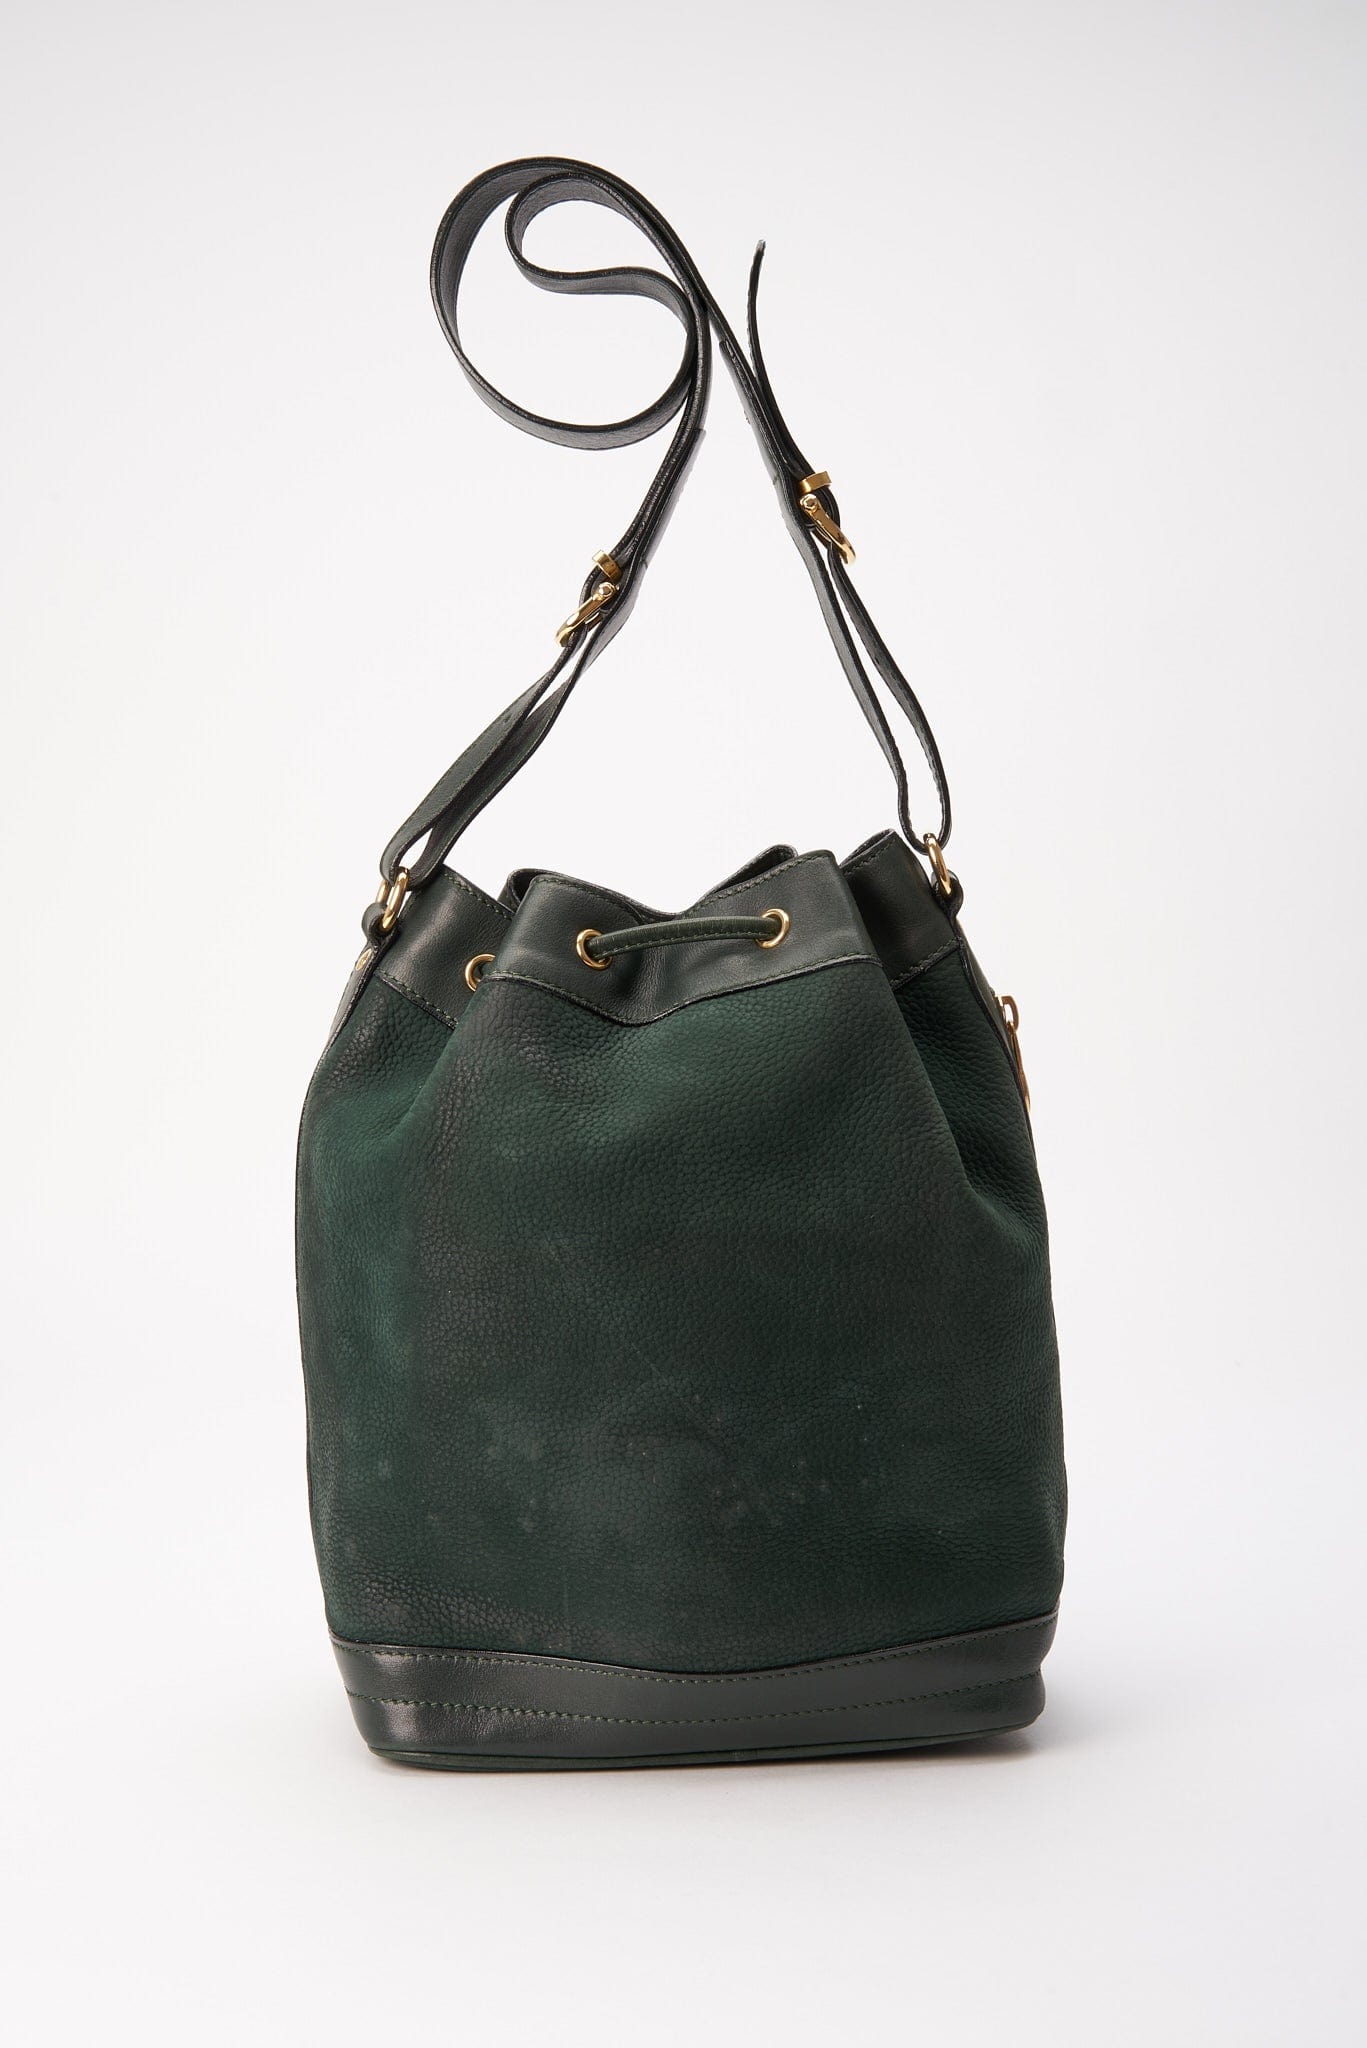 Vintage Celine Canvas and Leather Bucket Bag